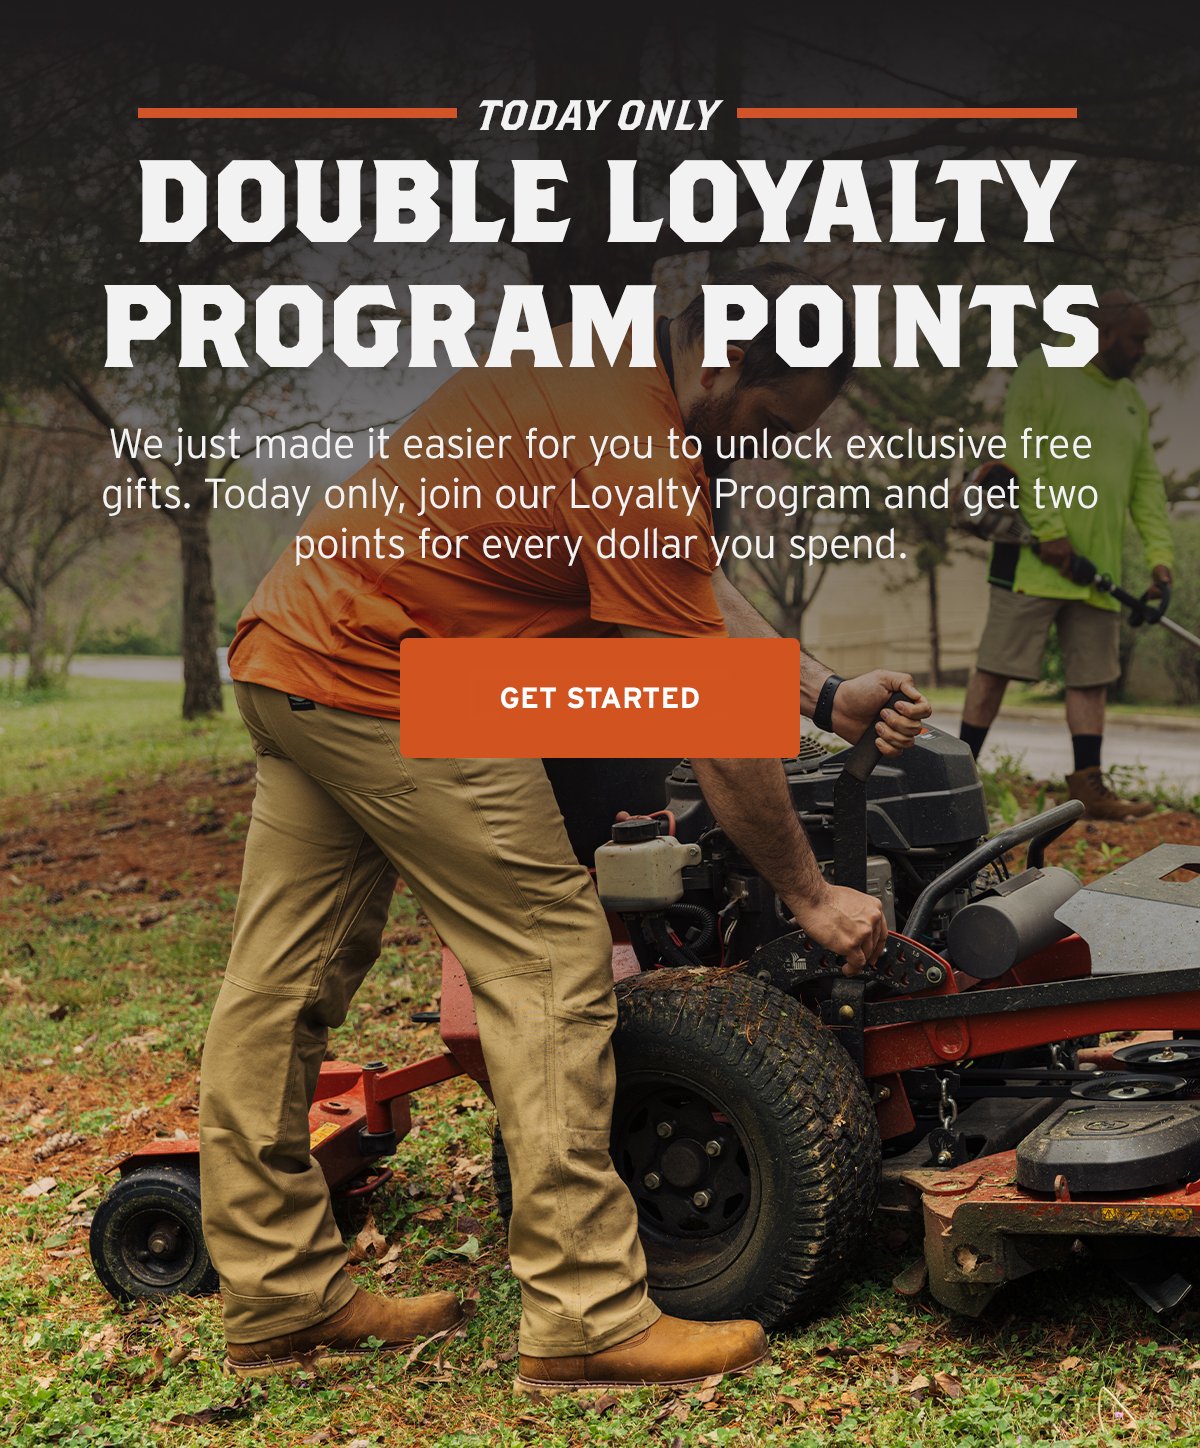 Double Loyalty Program Points